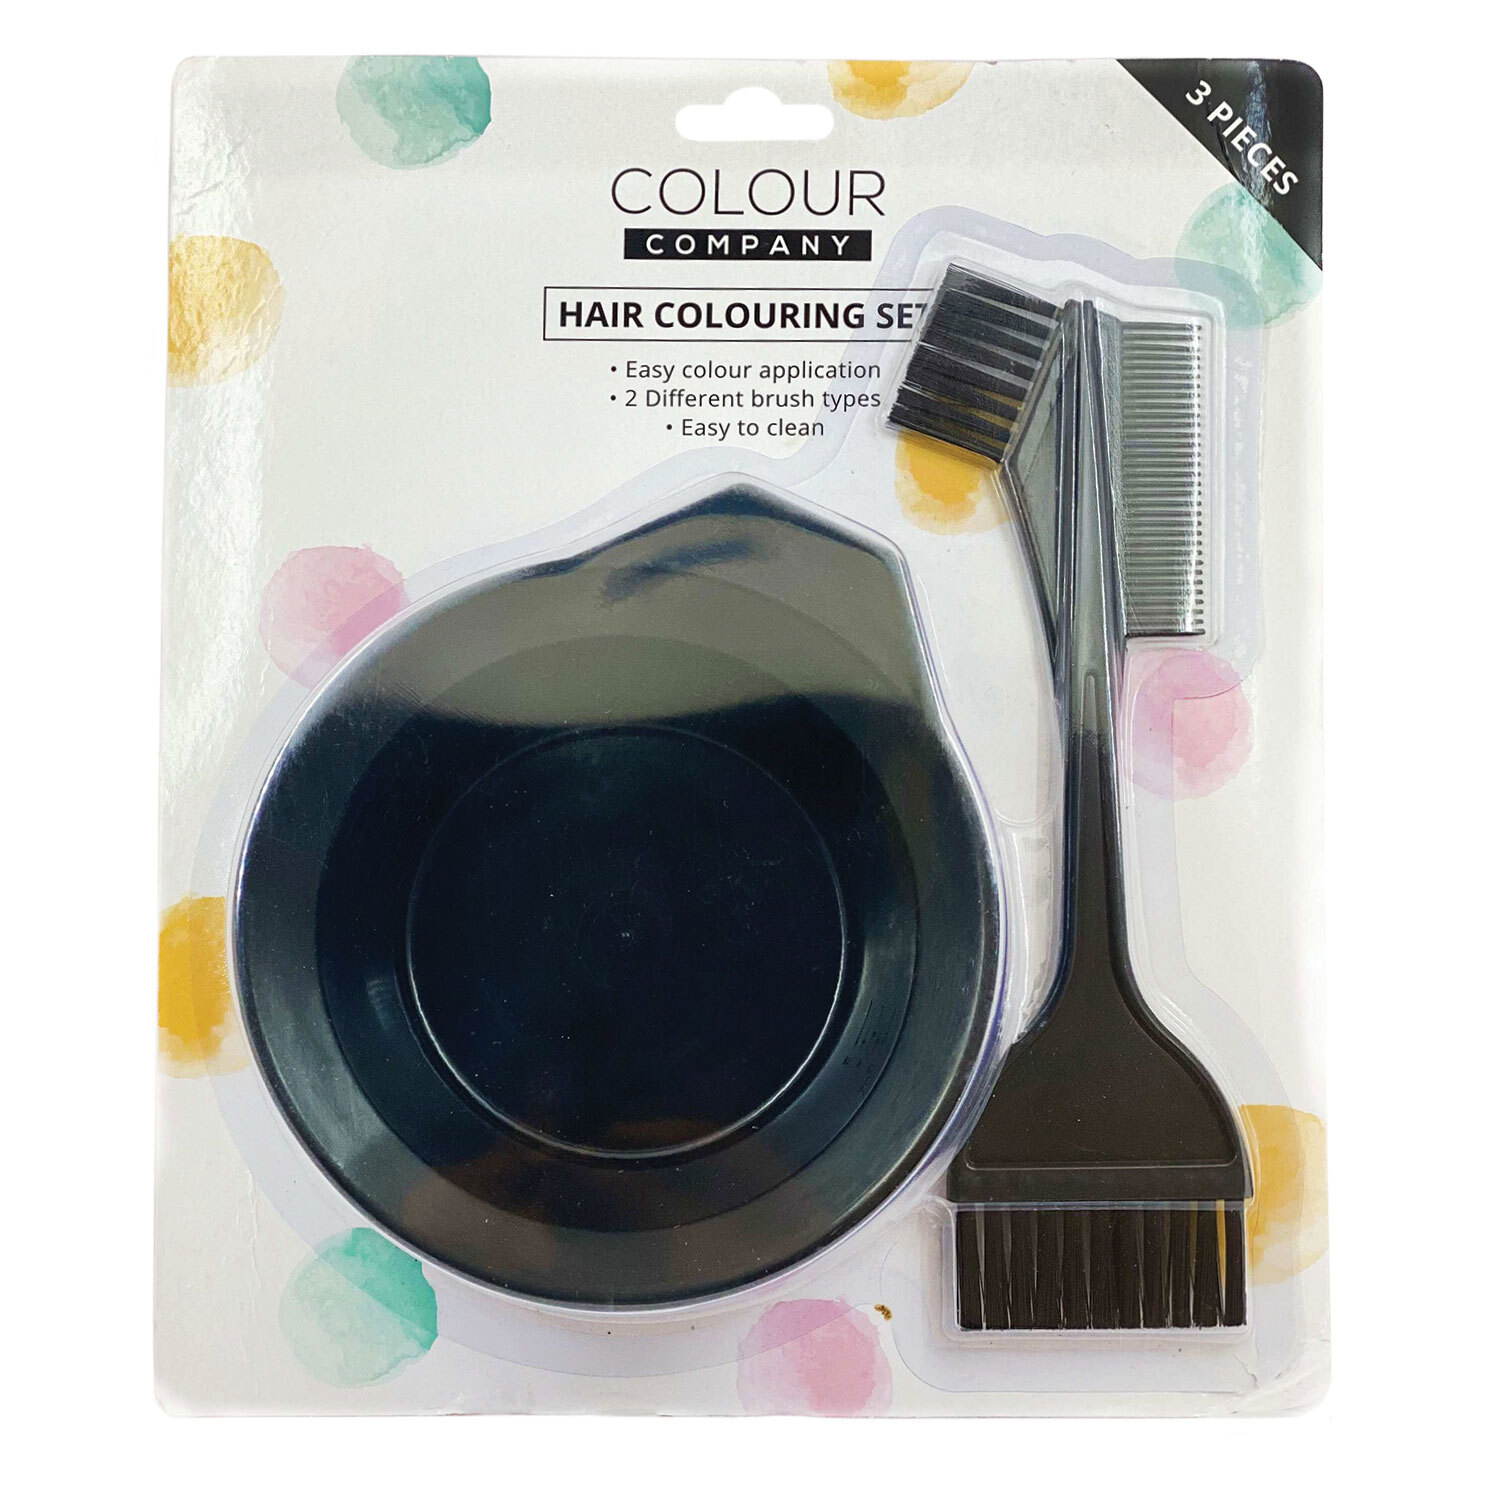 Colour Company 3 Piece Hair Colouring Set Image